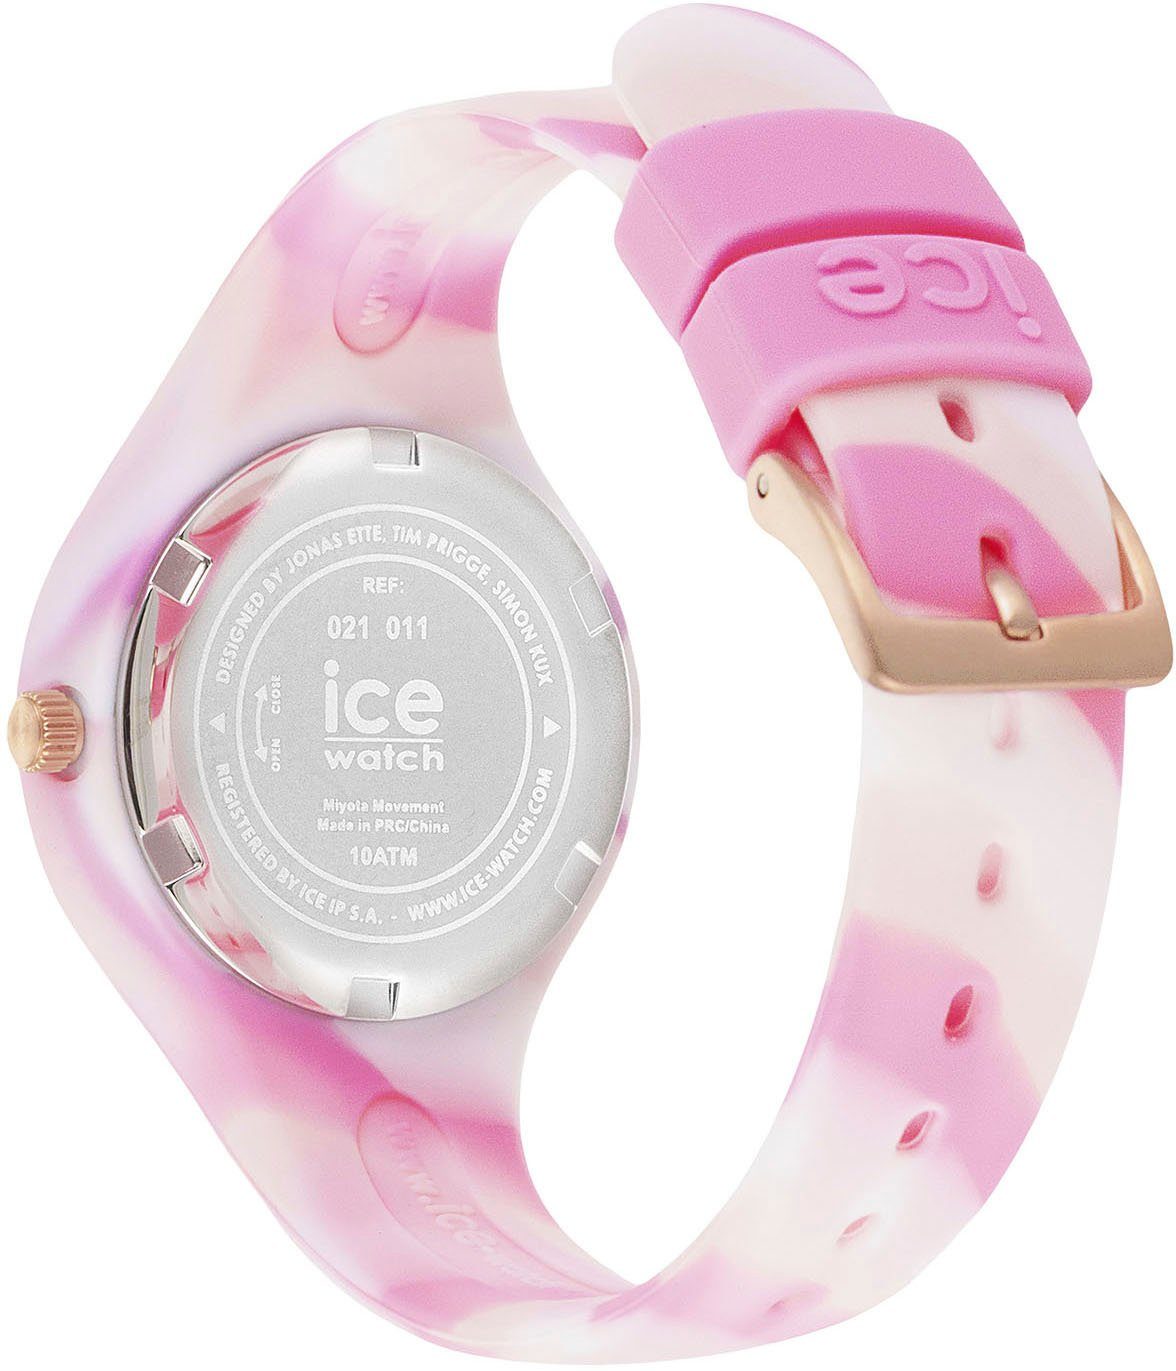 ice-watch Quarzuhr ICE tie Pink and - - auch als shades ideal 021011, Geschenk - dye 3H, Extra-Small